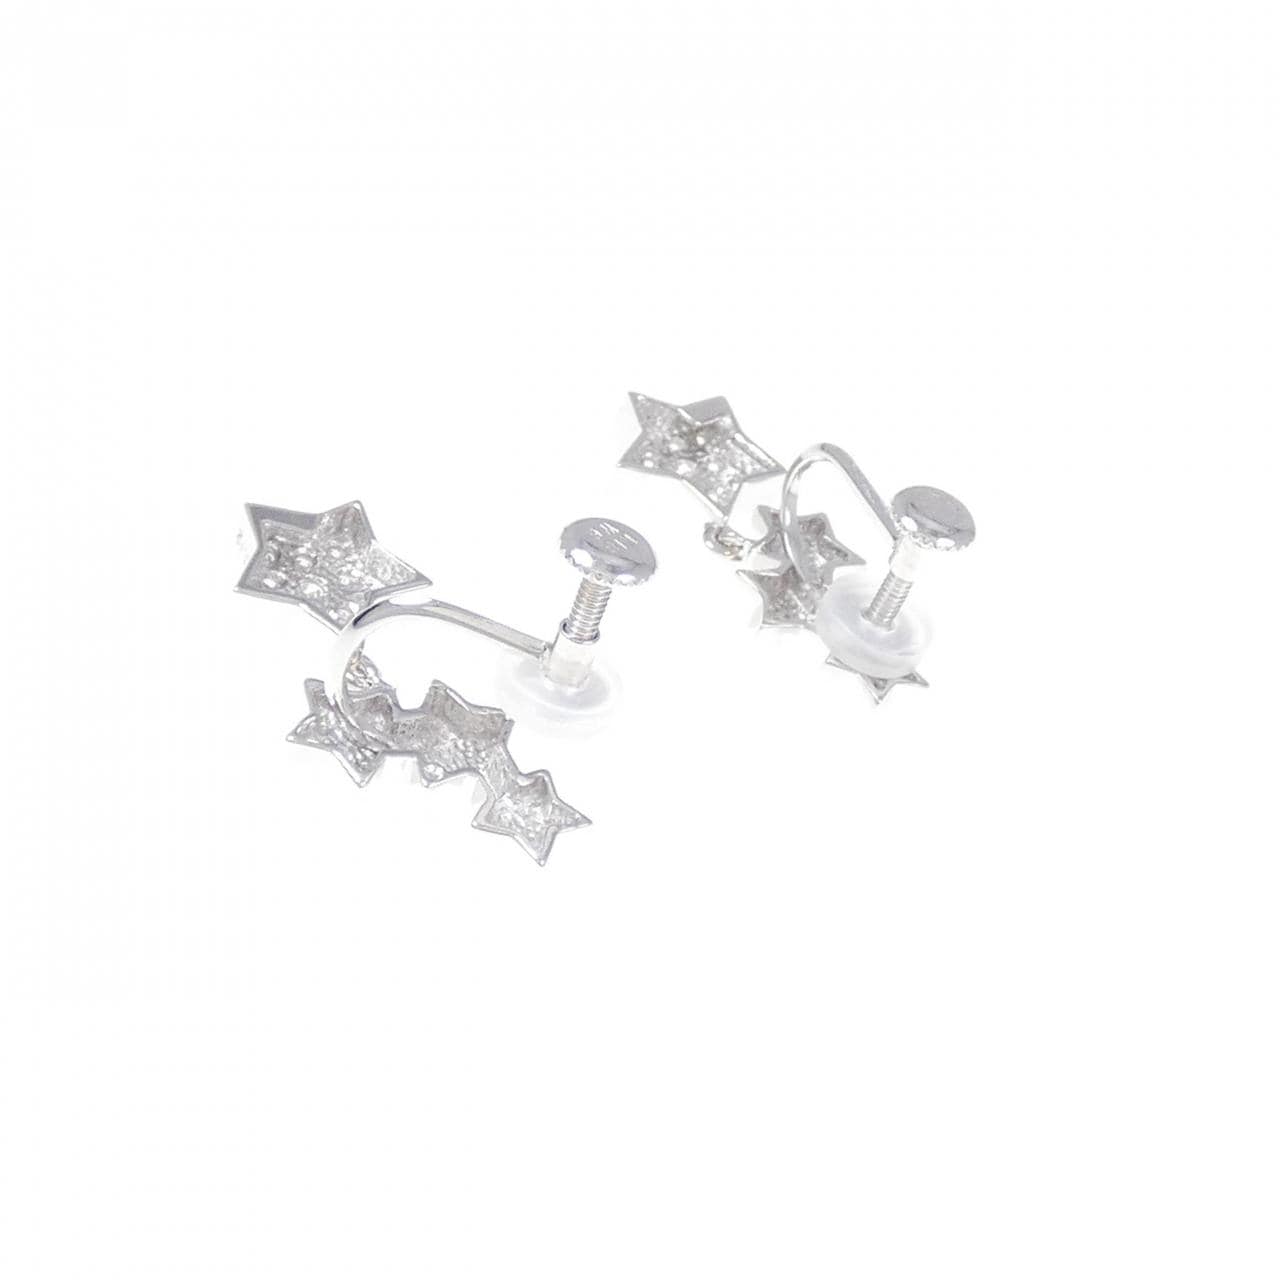 K18WG star Diamond earrings 0.24CT